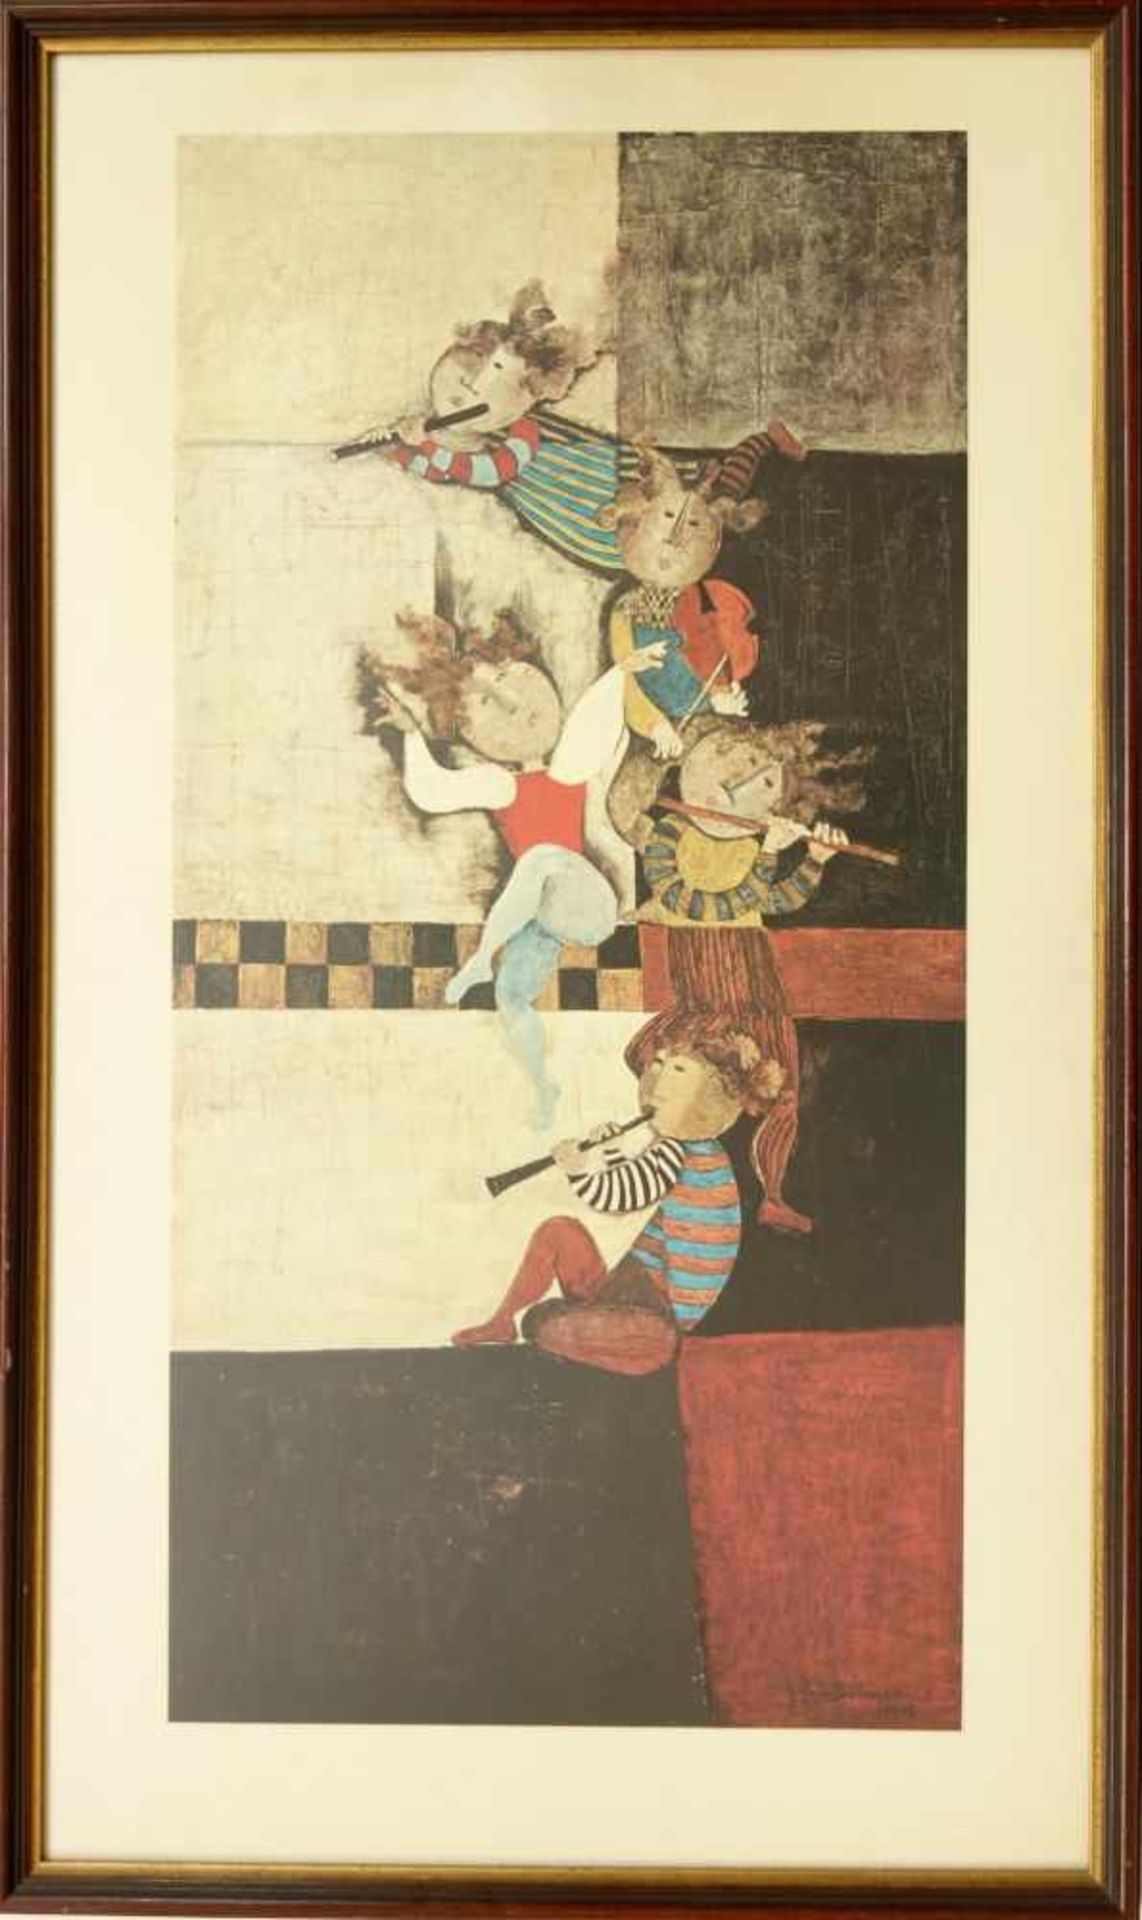 Rodo Boulonger, Graciela "Musizierende Kinder"Farbdruck, in verglastem Rahmen, ges.96*57cm